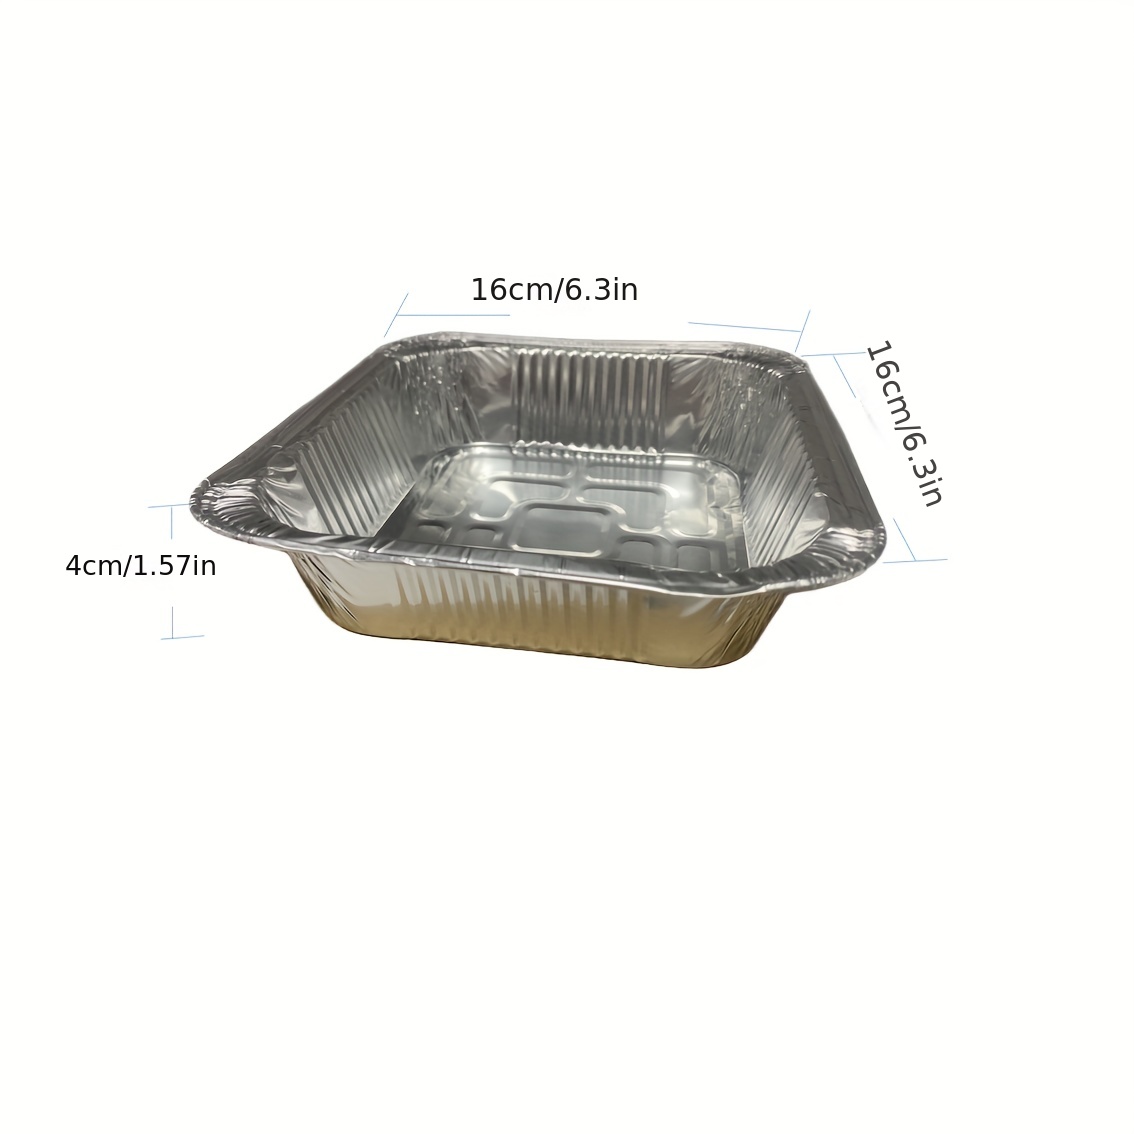 Disposable Aluminum Tin Foil Baking Pans Bakeware Square Inch Or